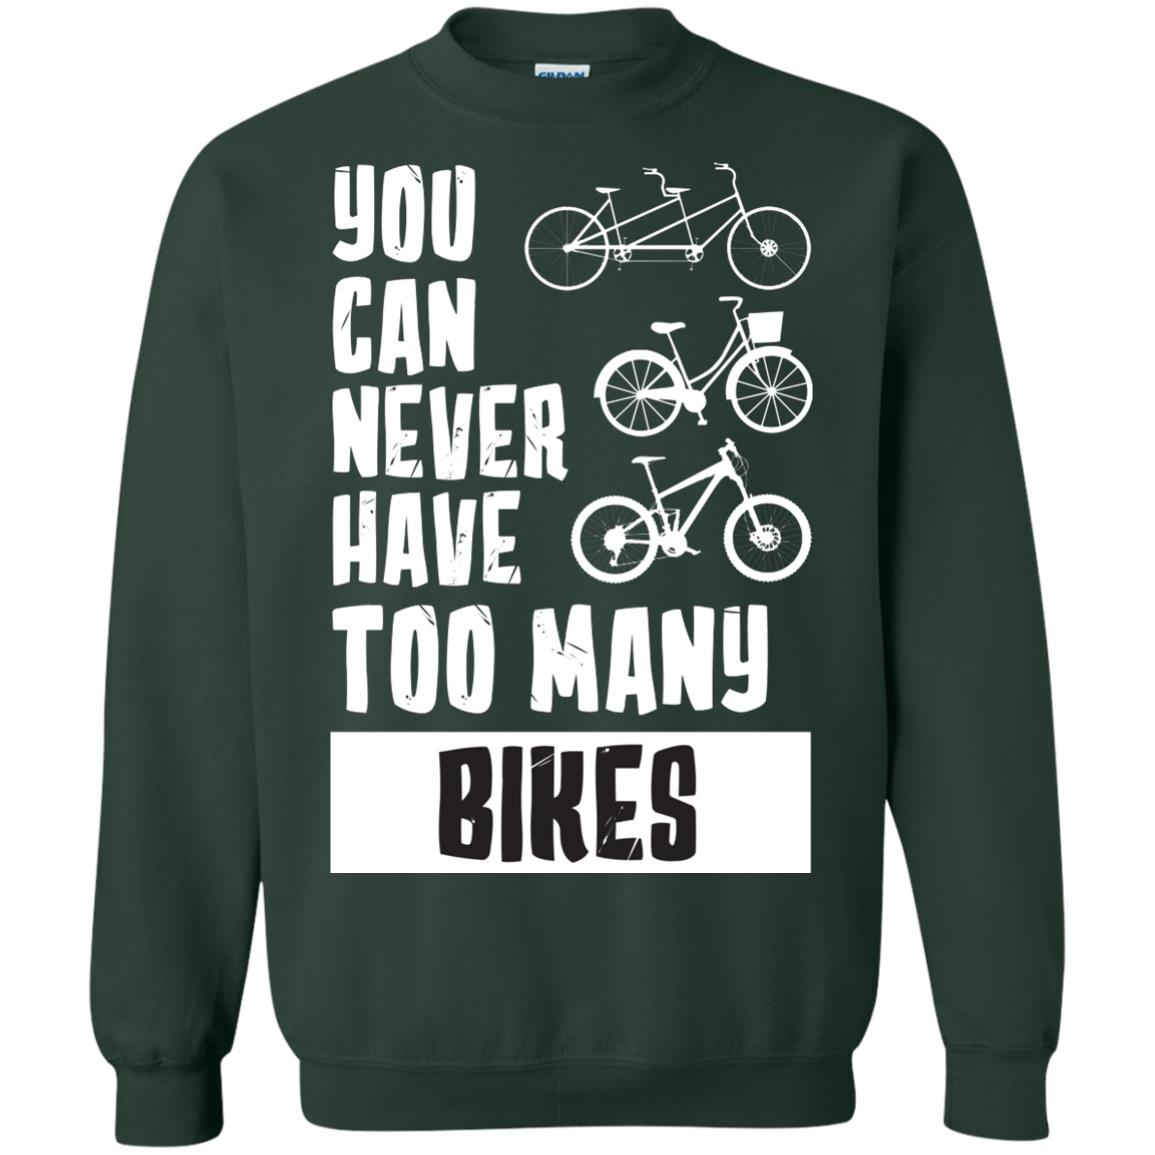 You Can Never Have Too Many Bikes Shirt1 G180 Gildan Crewneck Pullover Sweatshirt 8 oz.